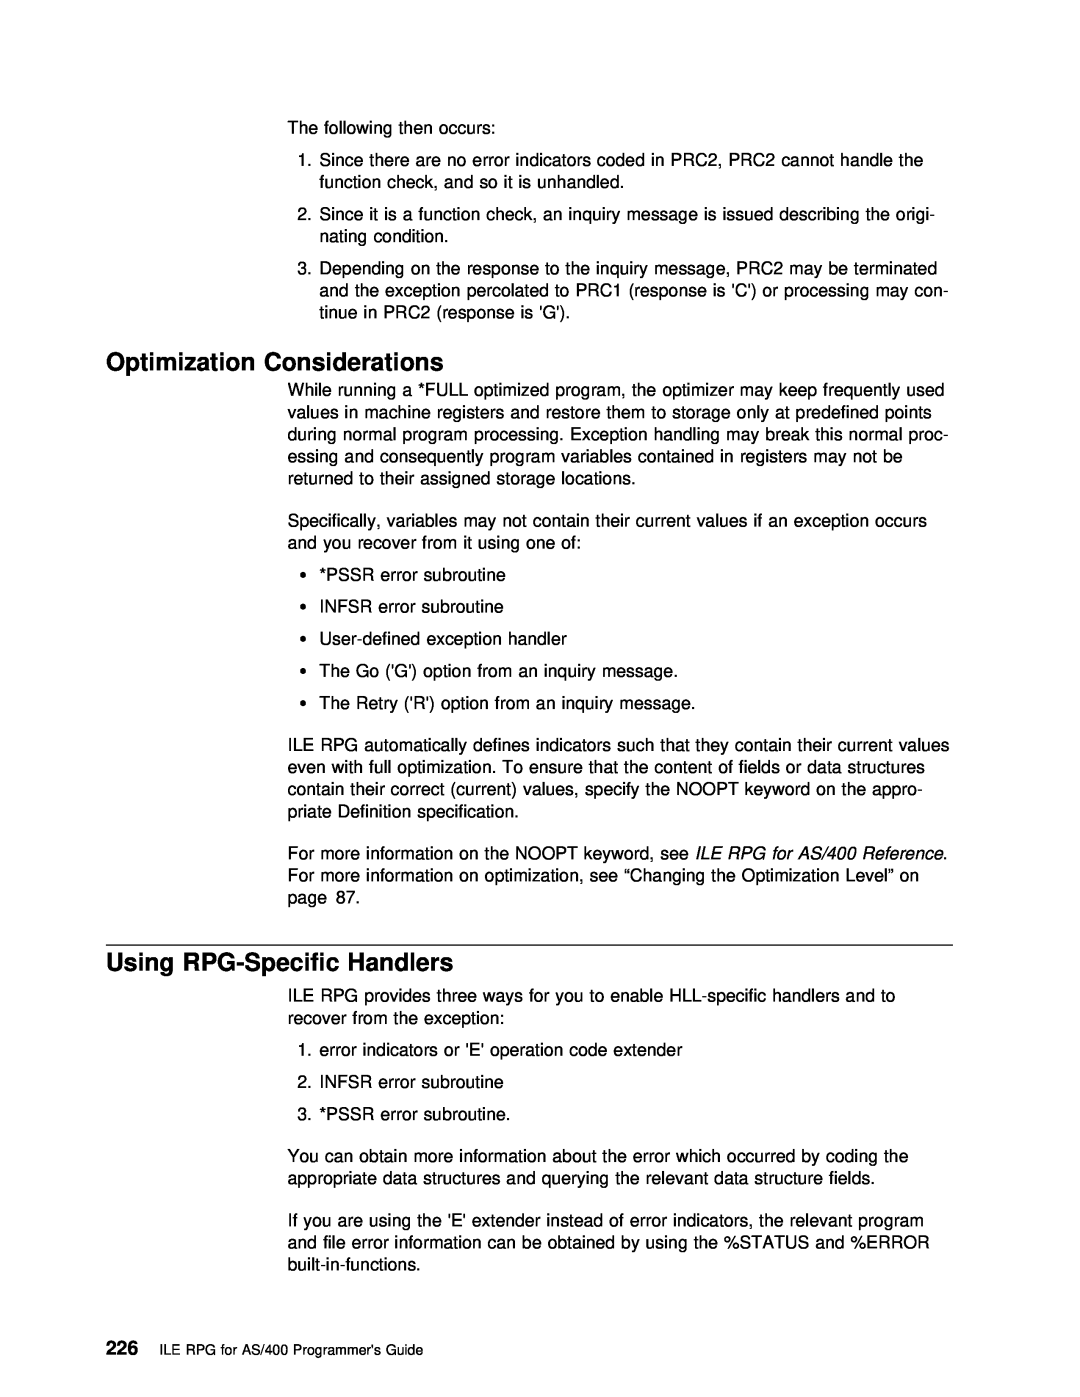 IBM AS/400 manual Optimization Considerations, Using RPG-Specific Handlers, keyword, ILE 